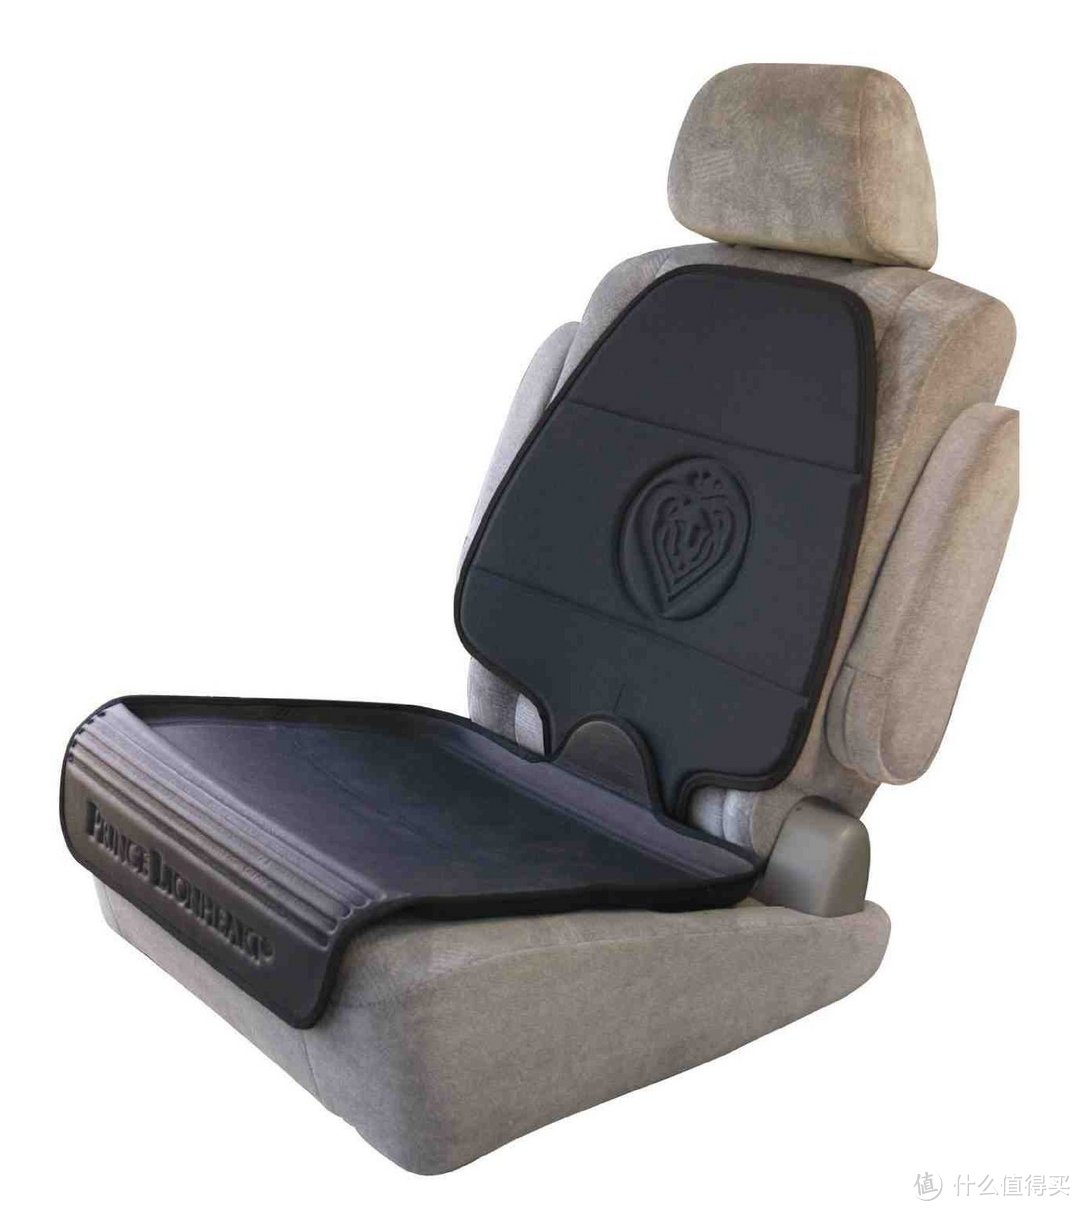 Prince Lionheart 2 Stage Seatsaver 两用安全座椅保护垫